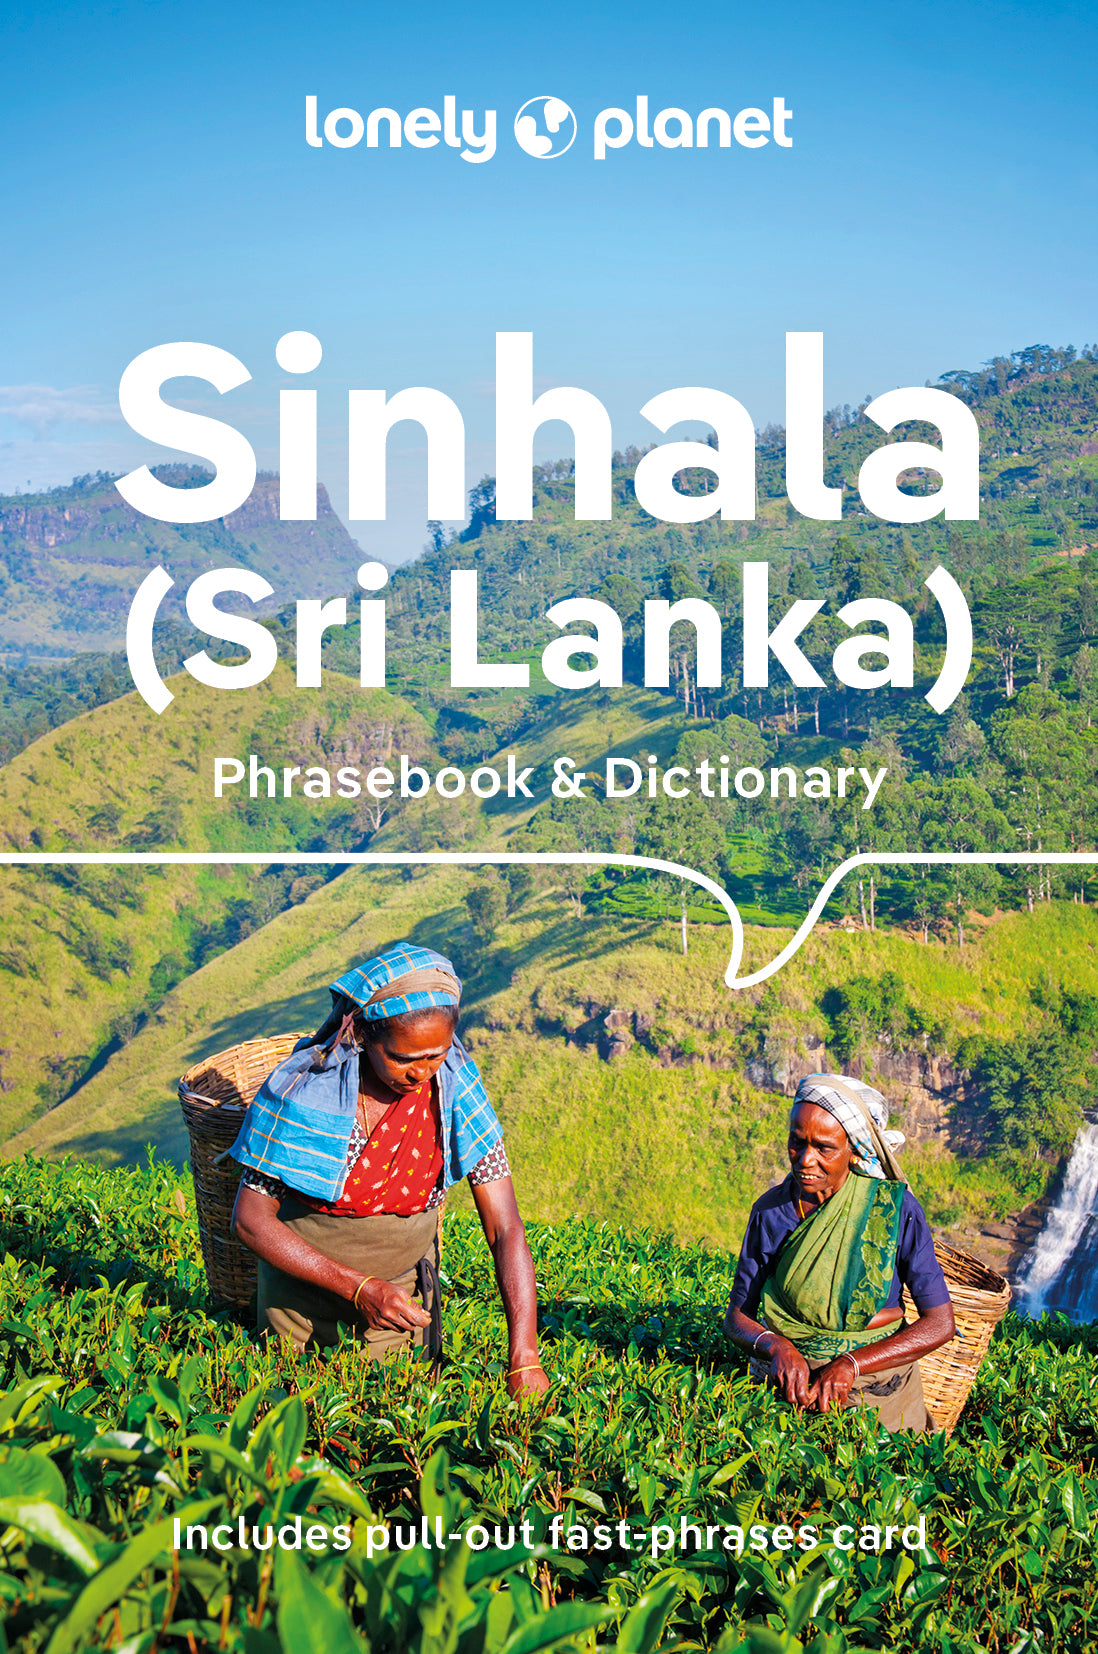 Sinhala (Sri Lanka) Phrasebook & Dictionary